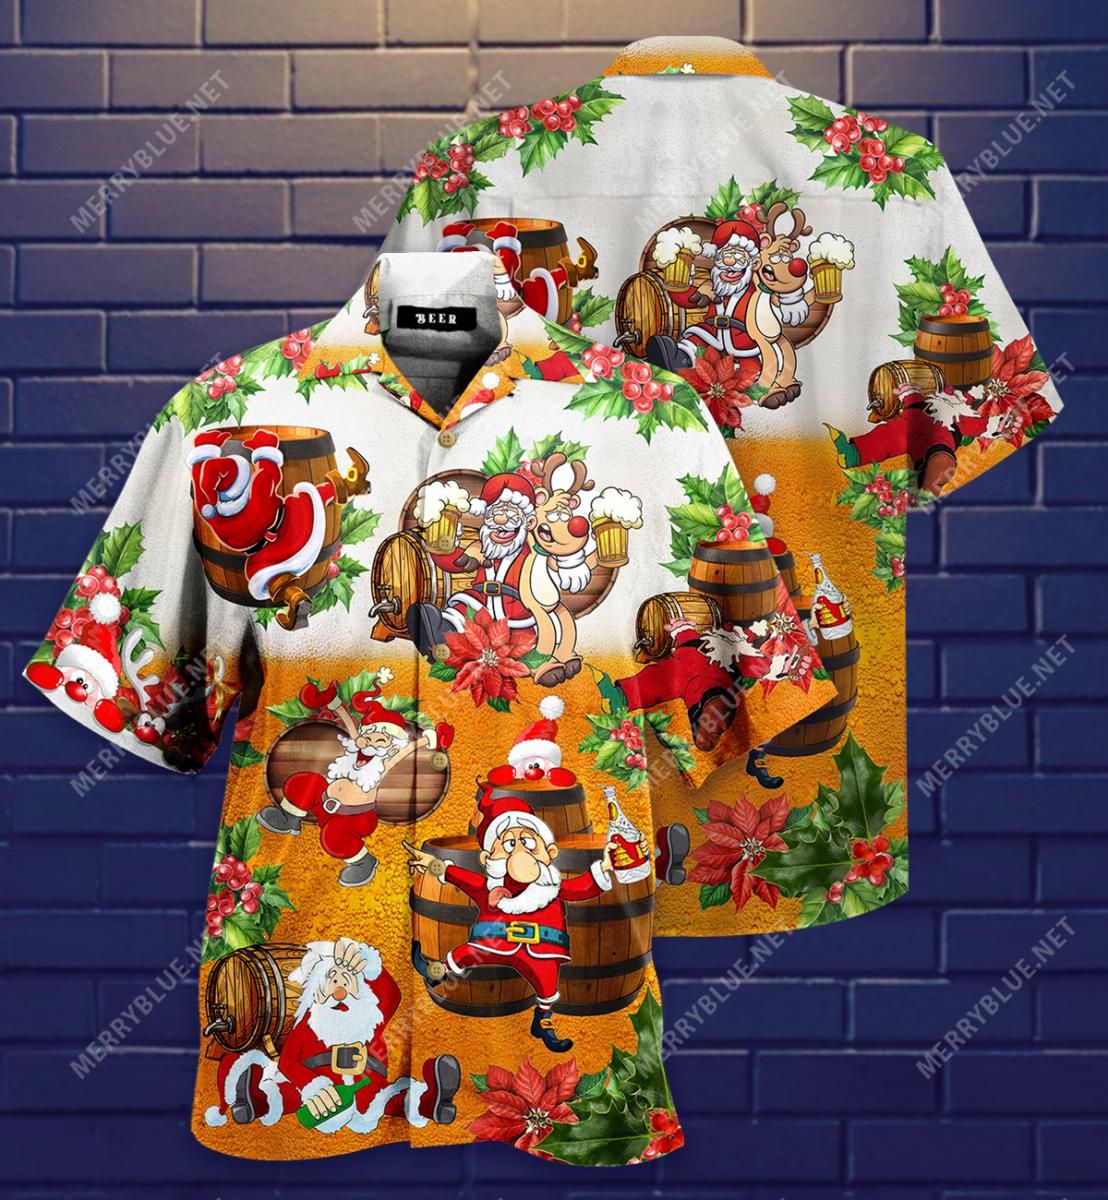 dear santa heres your beer aloha hawaiian shirt colorful short sleeve summer beach casual shirt for men and women 0d8ov